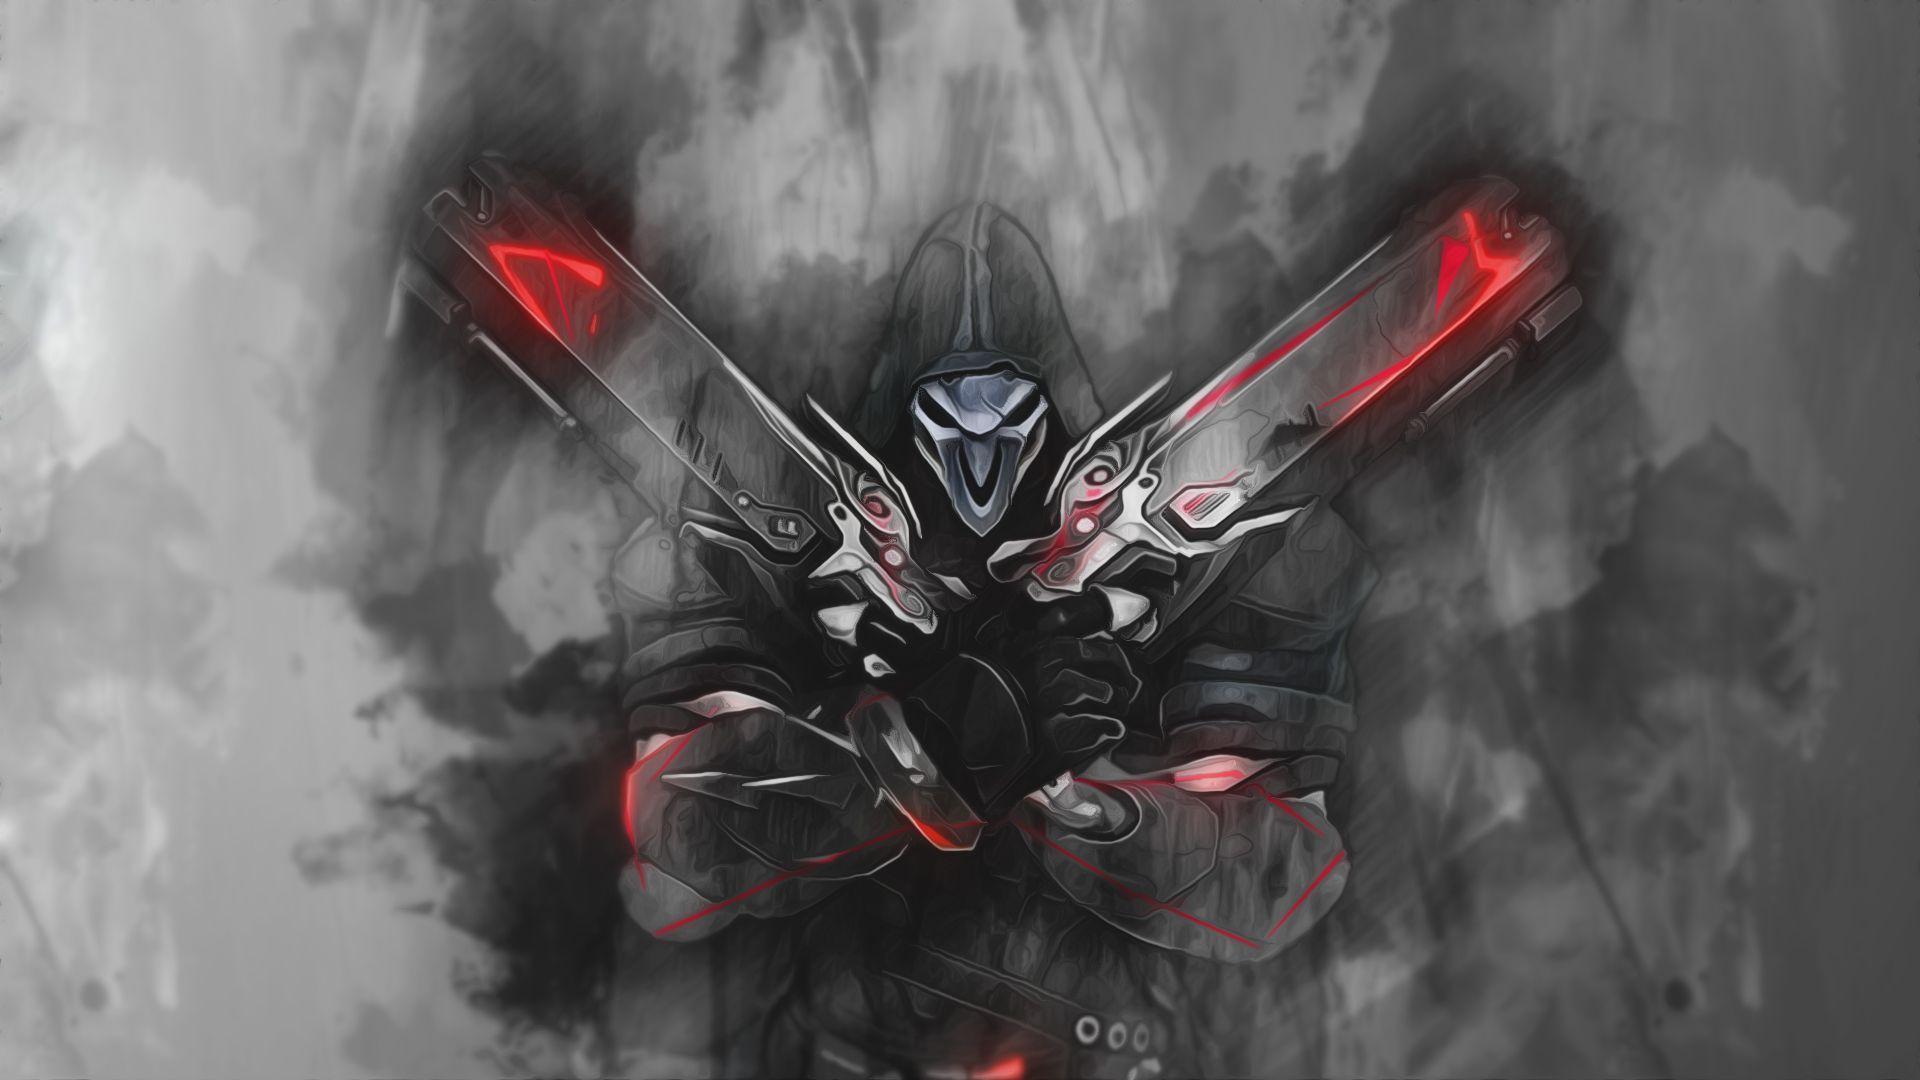 Hd Reaper Image - Reaper Wallpaper Overwatch - HD Wallpaper 